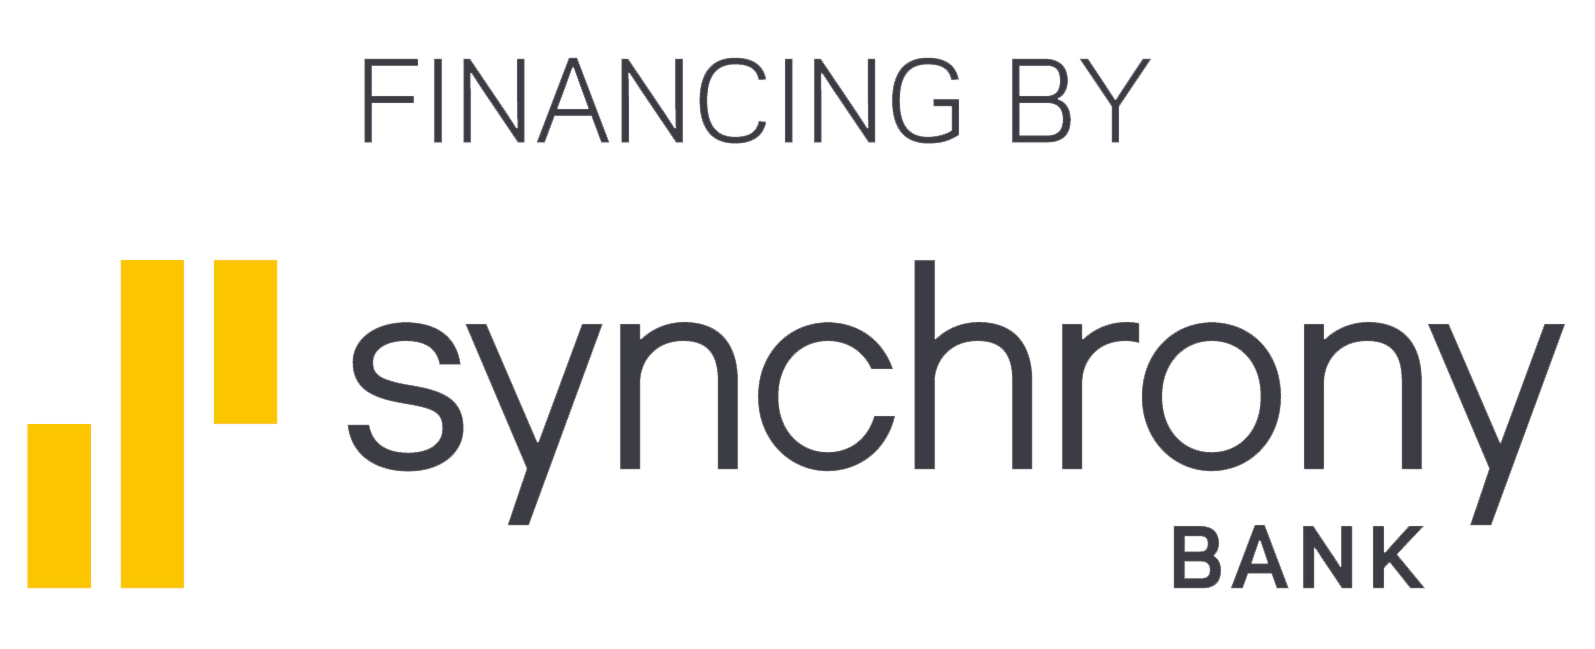 Synchrony bank